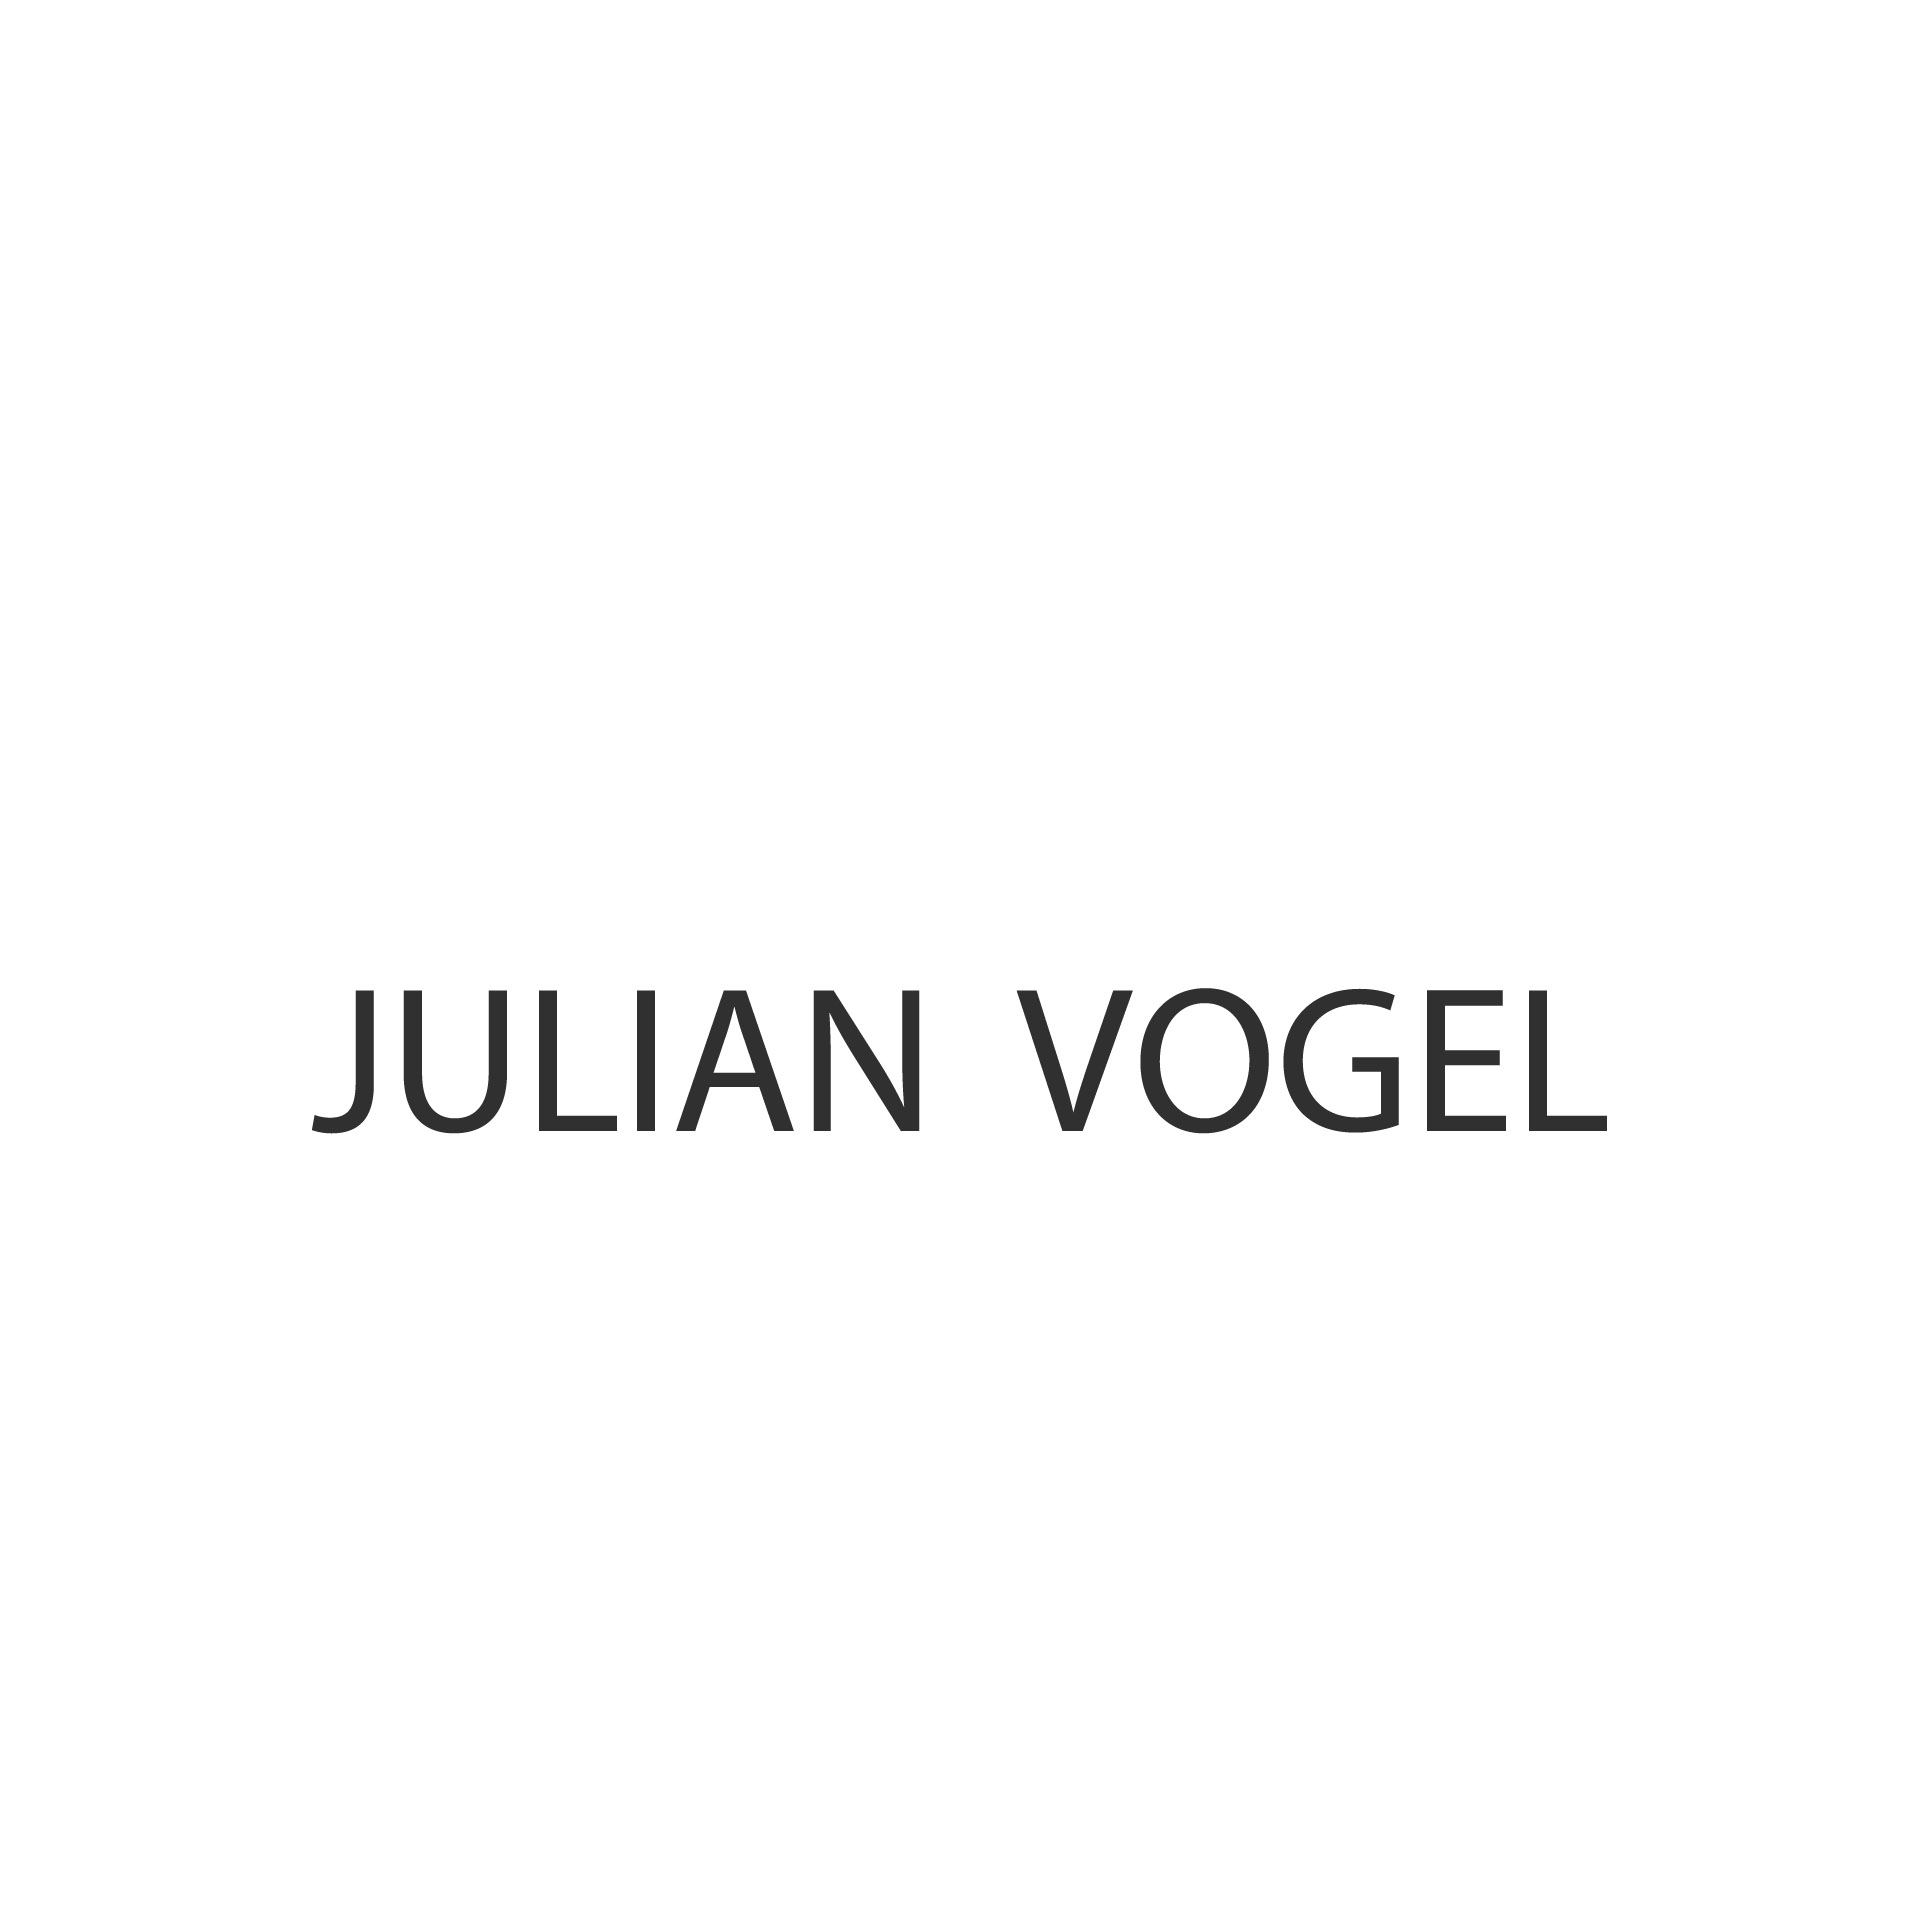 Julian_Vogel / Cie. unlisted